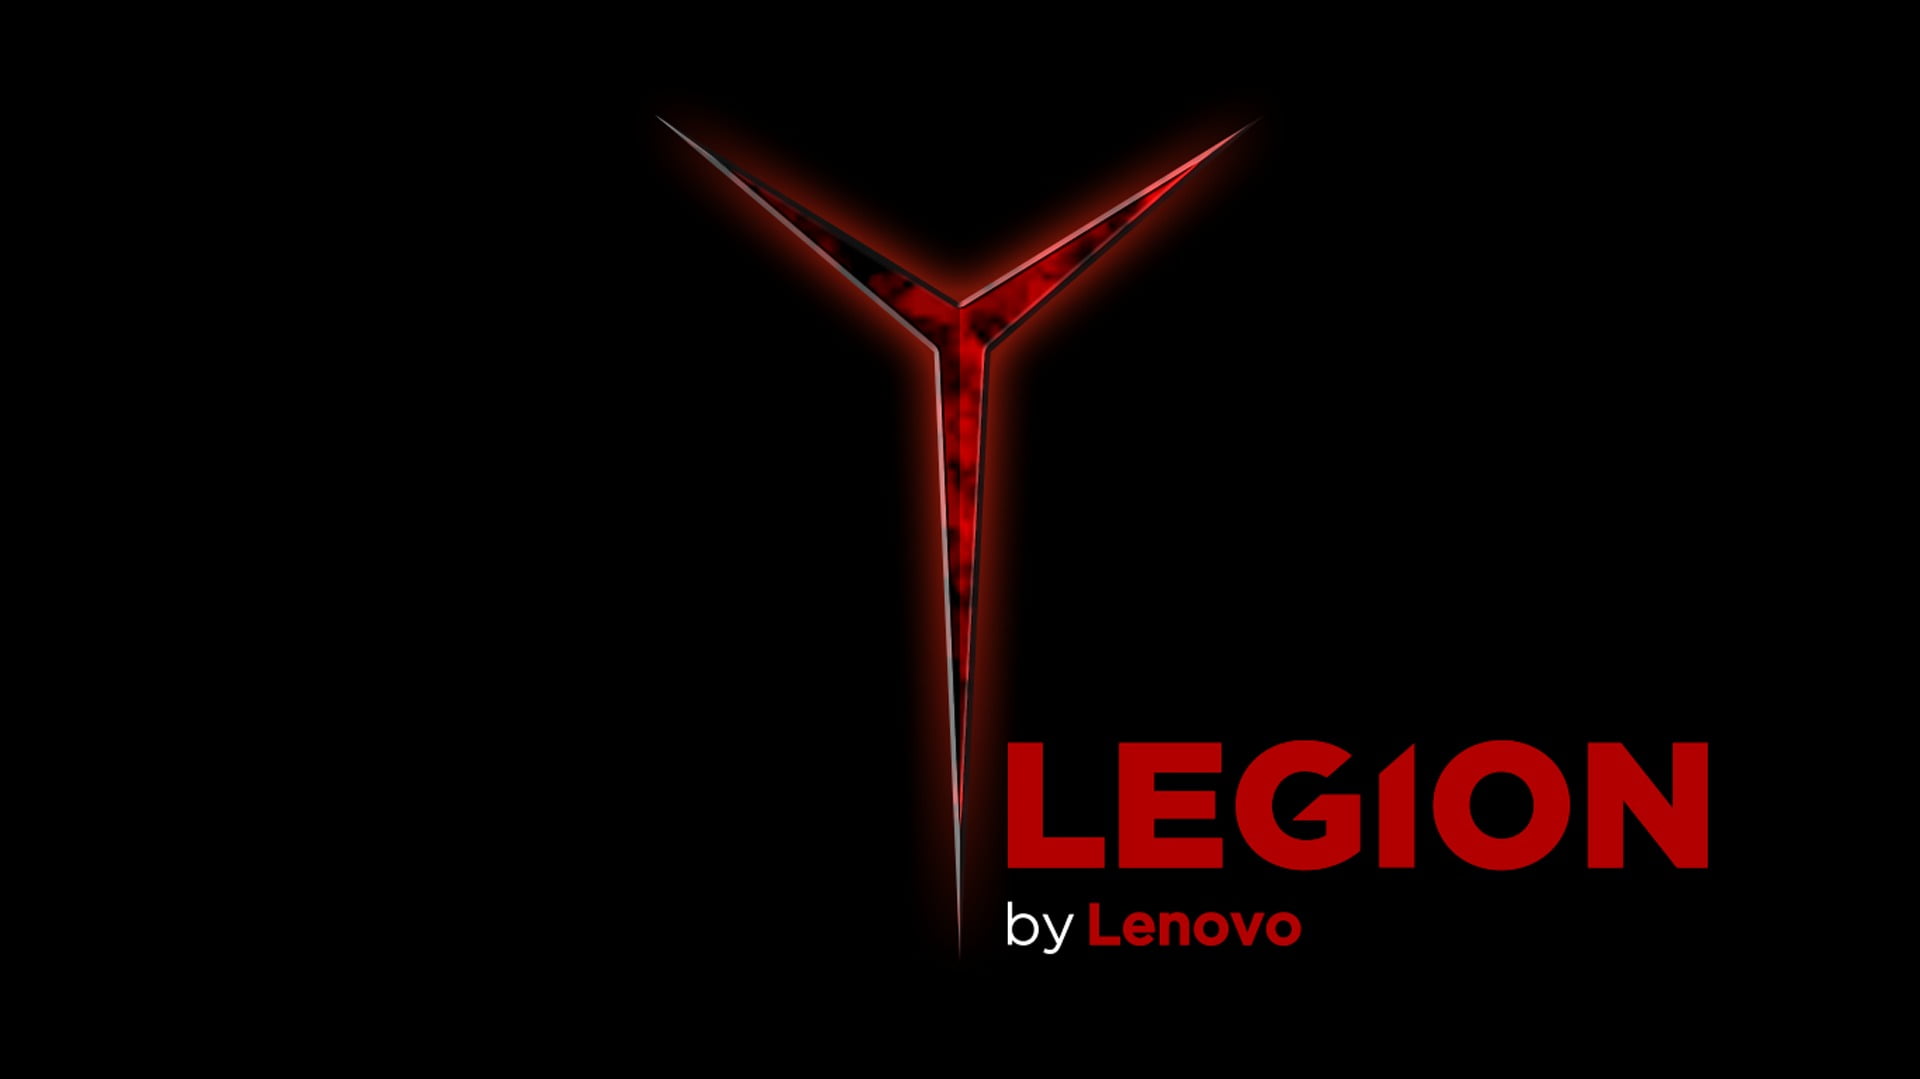 Lenovo, lenovo legion, PC gaming, red, illuminated, black background